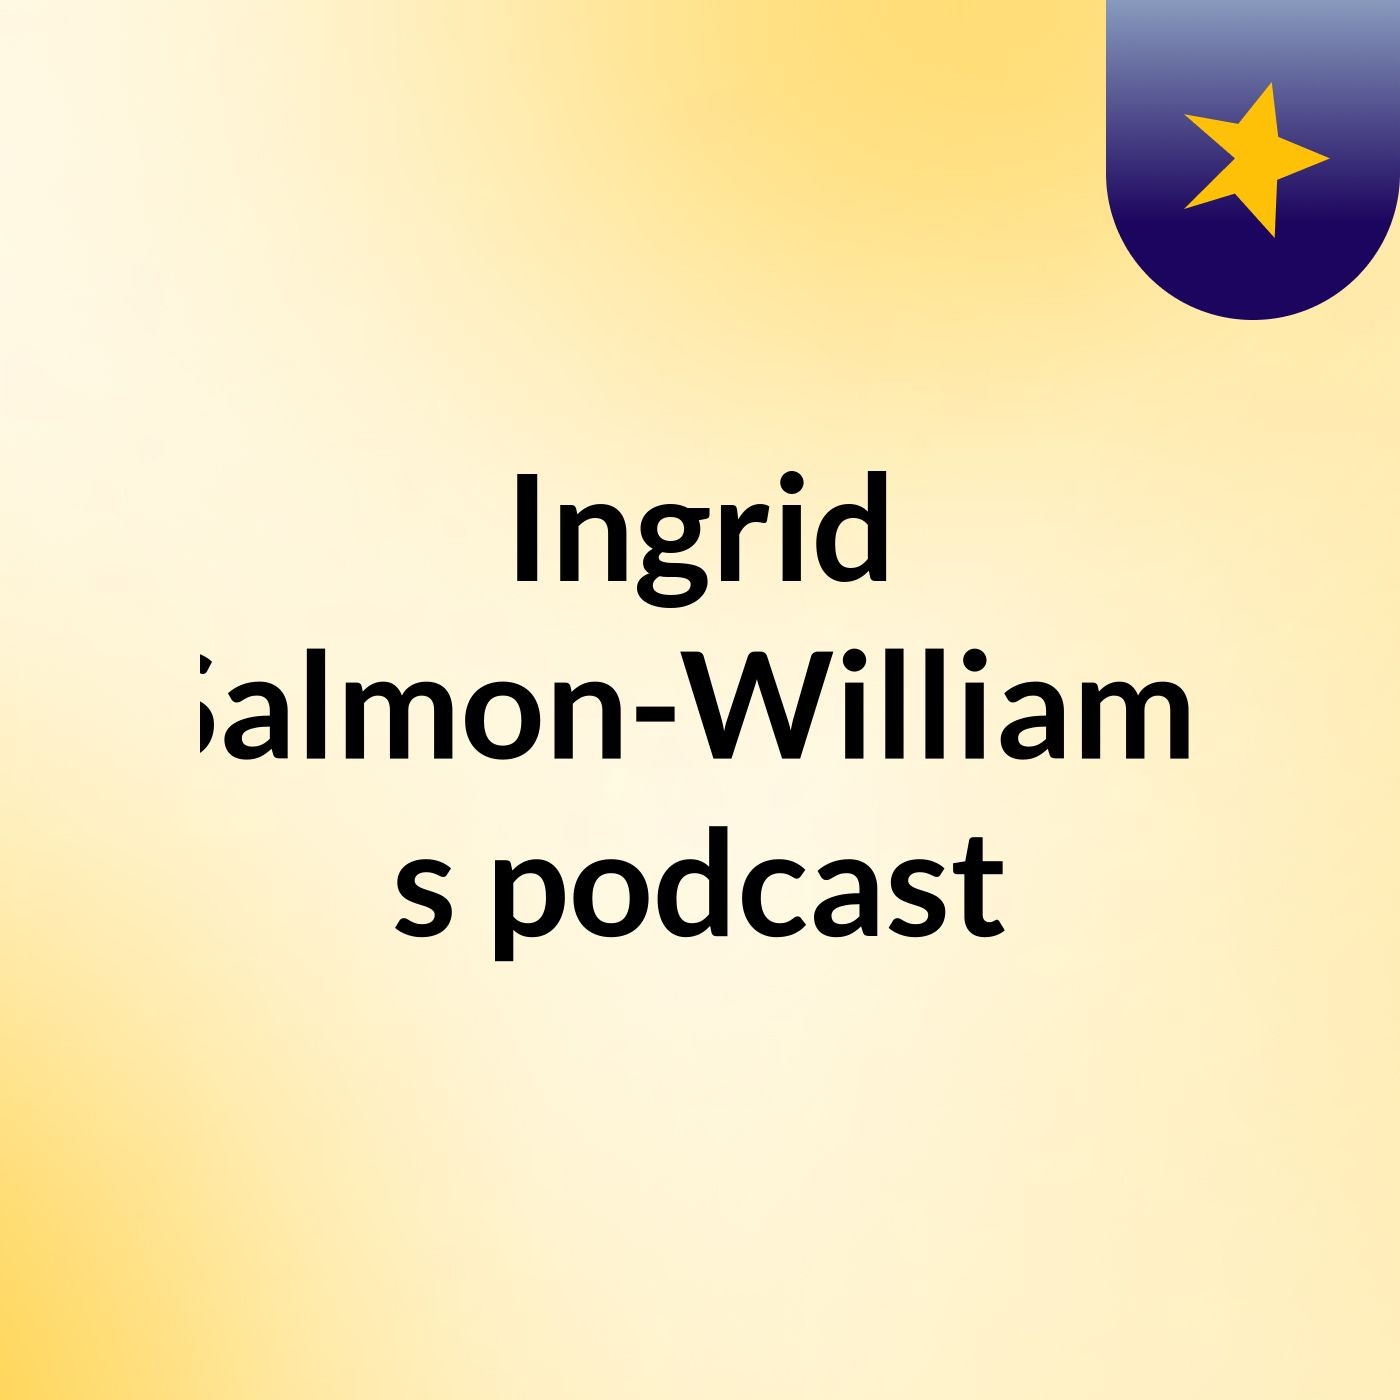 Episode 7 - Ingrid Salmon-Williams's podcast